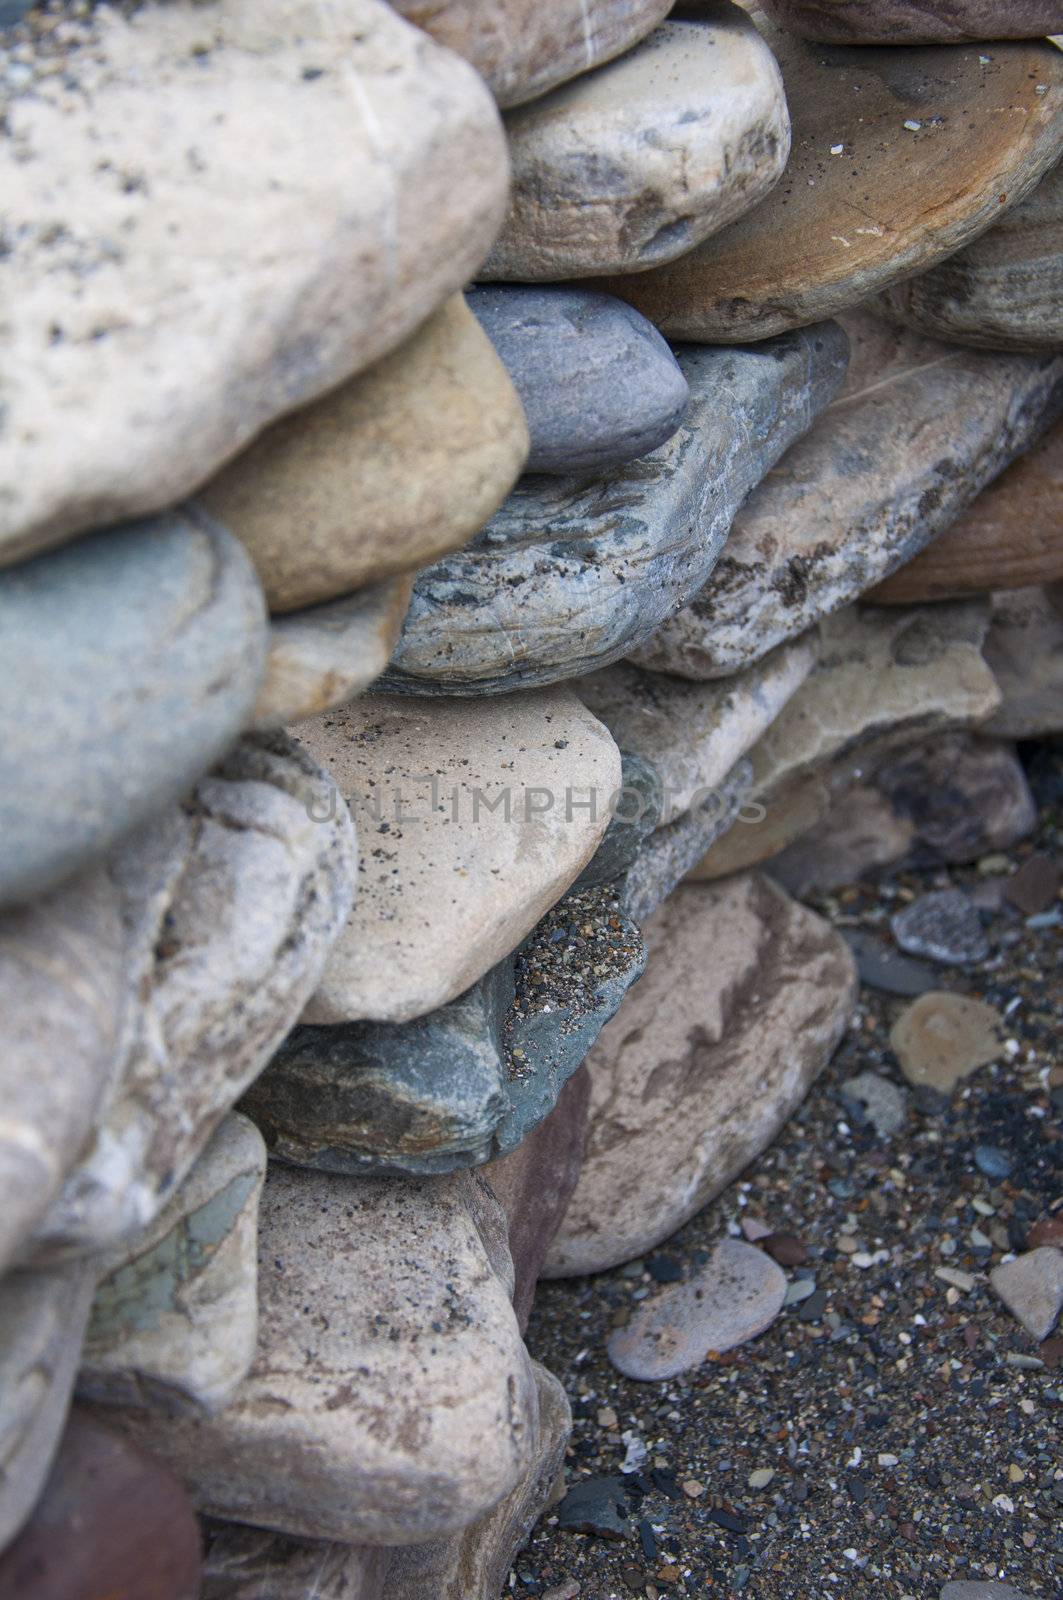 Philosofy nature stone on sea shore closeup